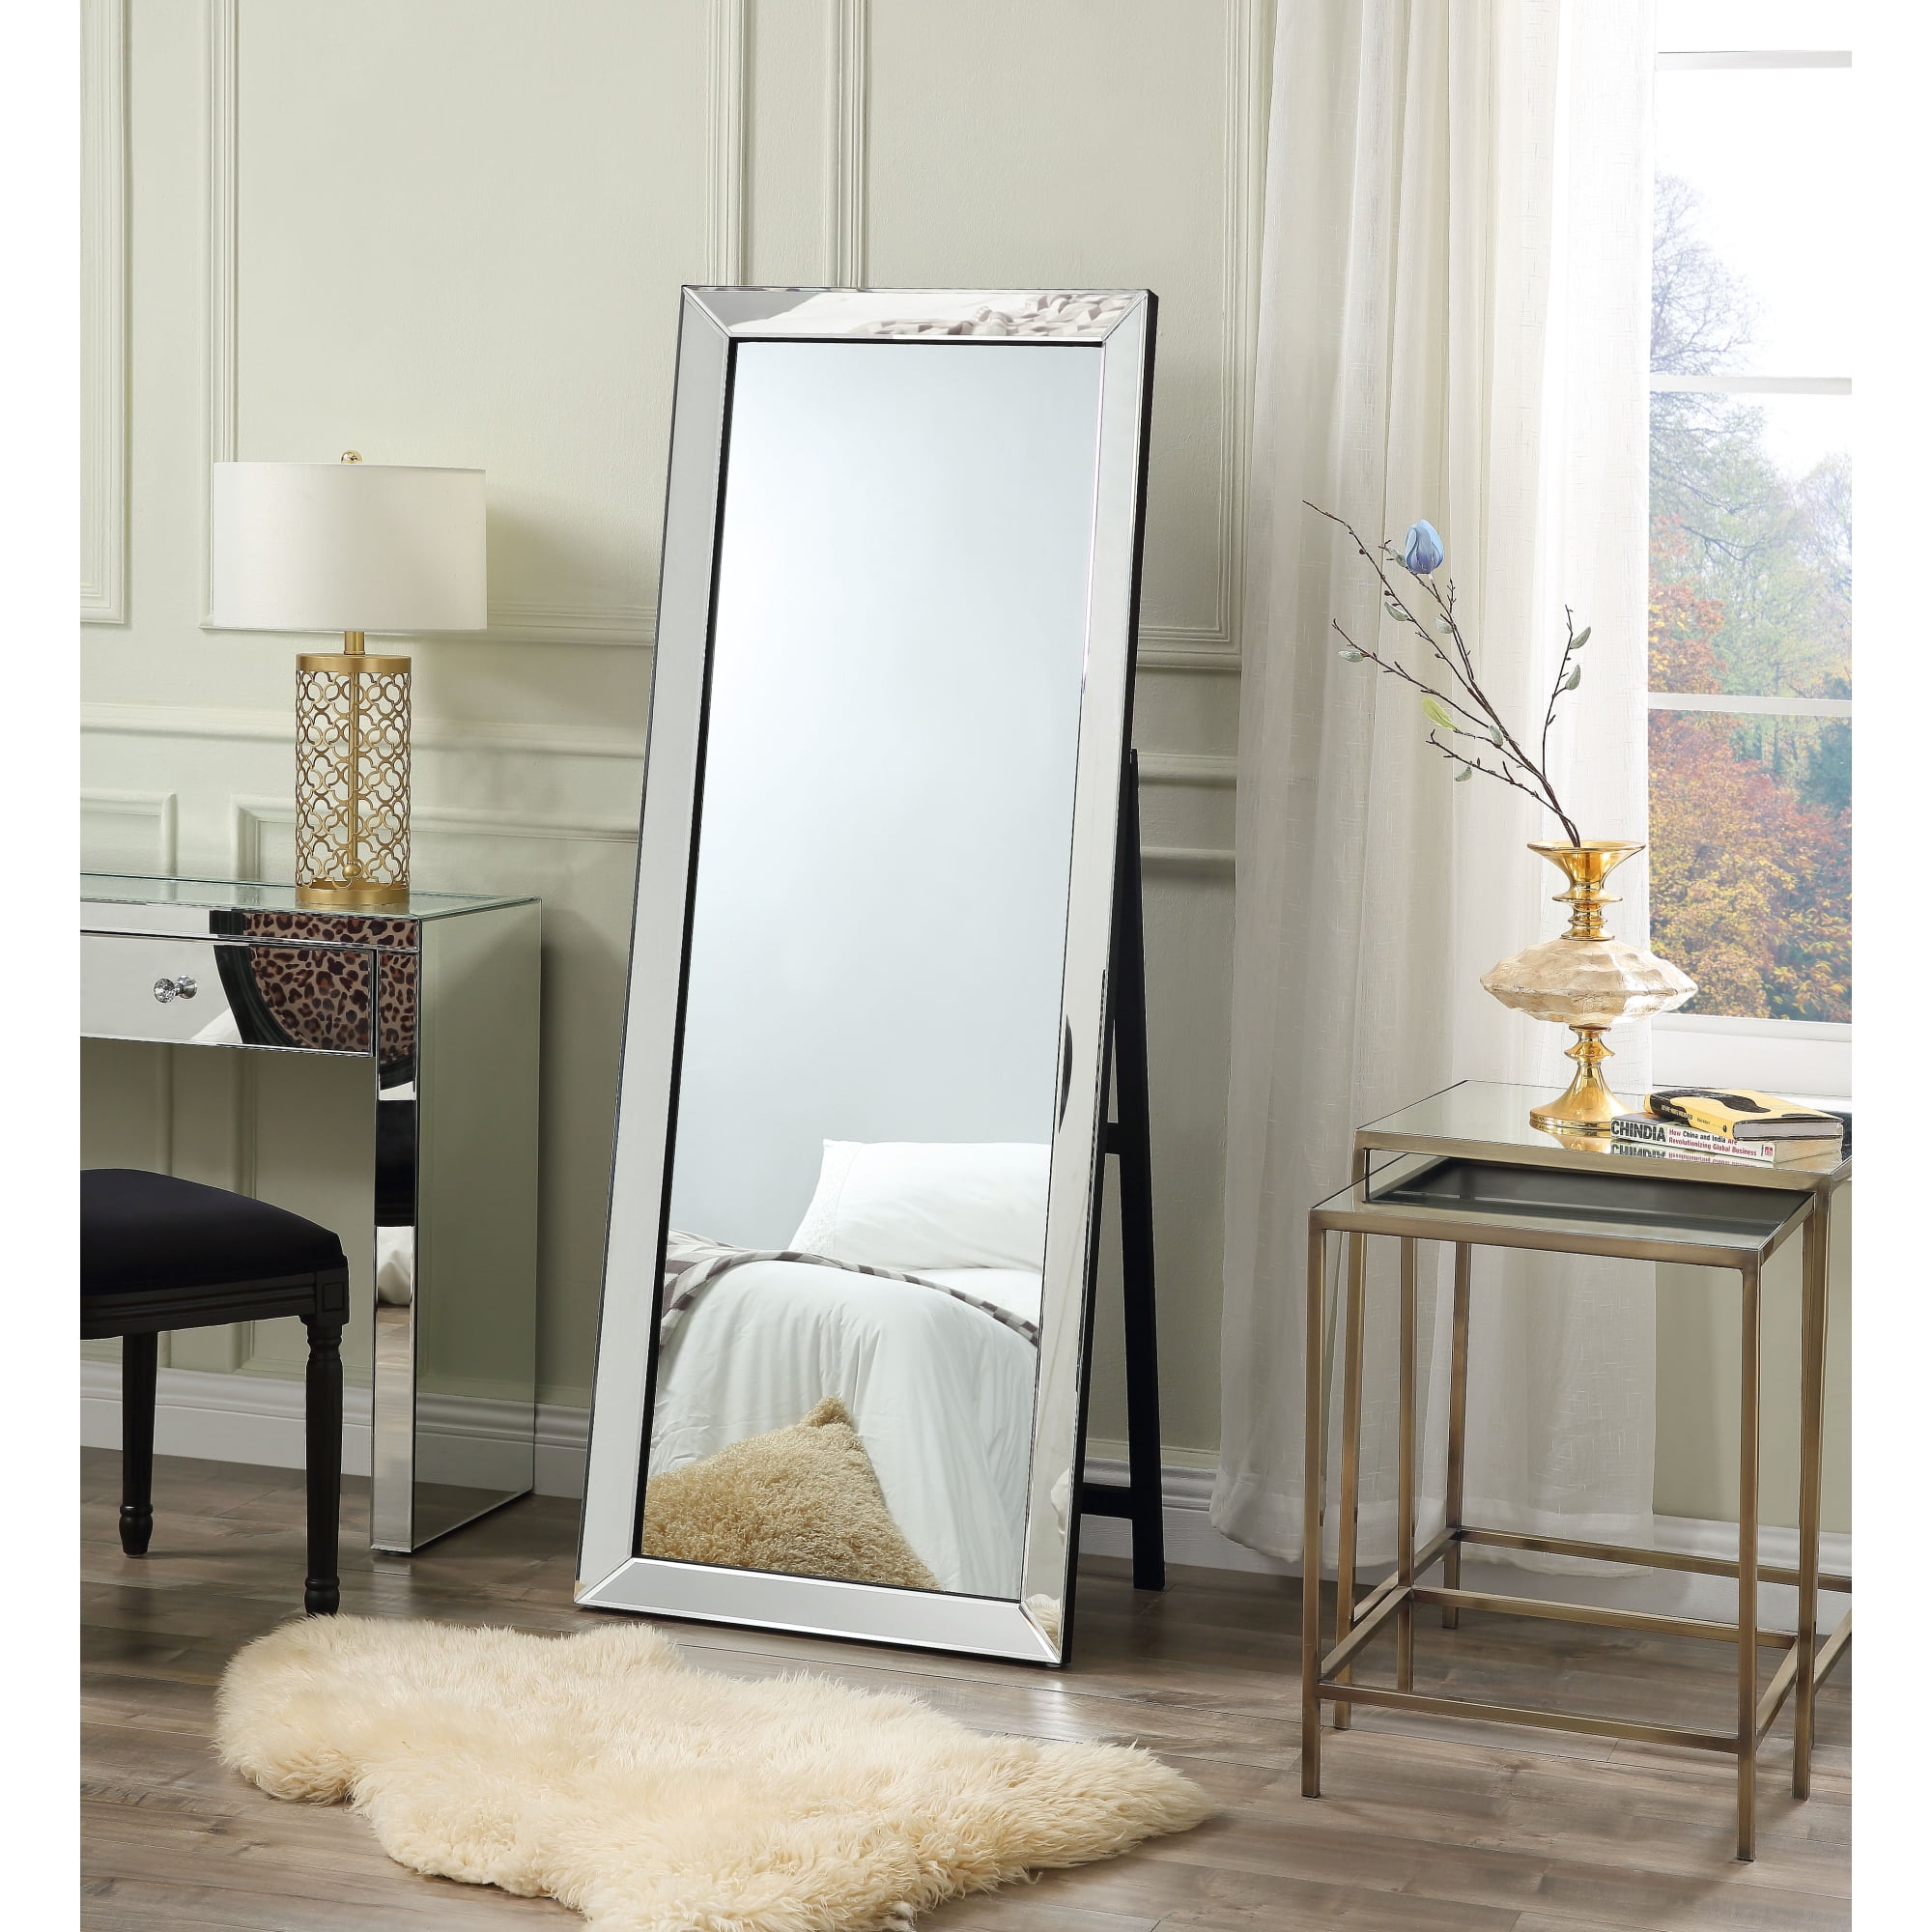 Inspired Home Dara Full Length Mirror, Standing Mirror For Bedroom